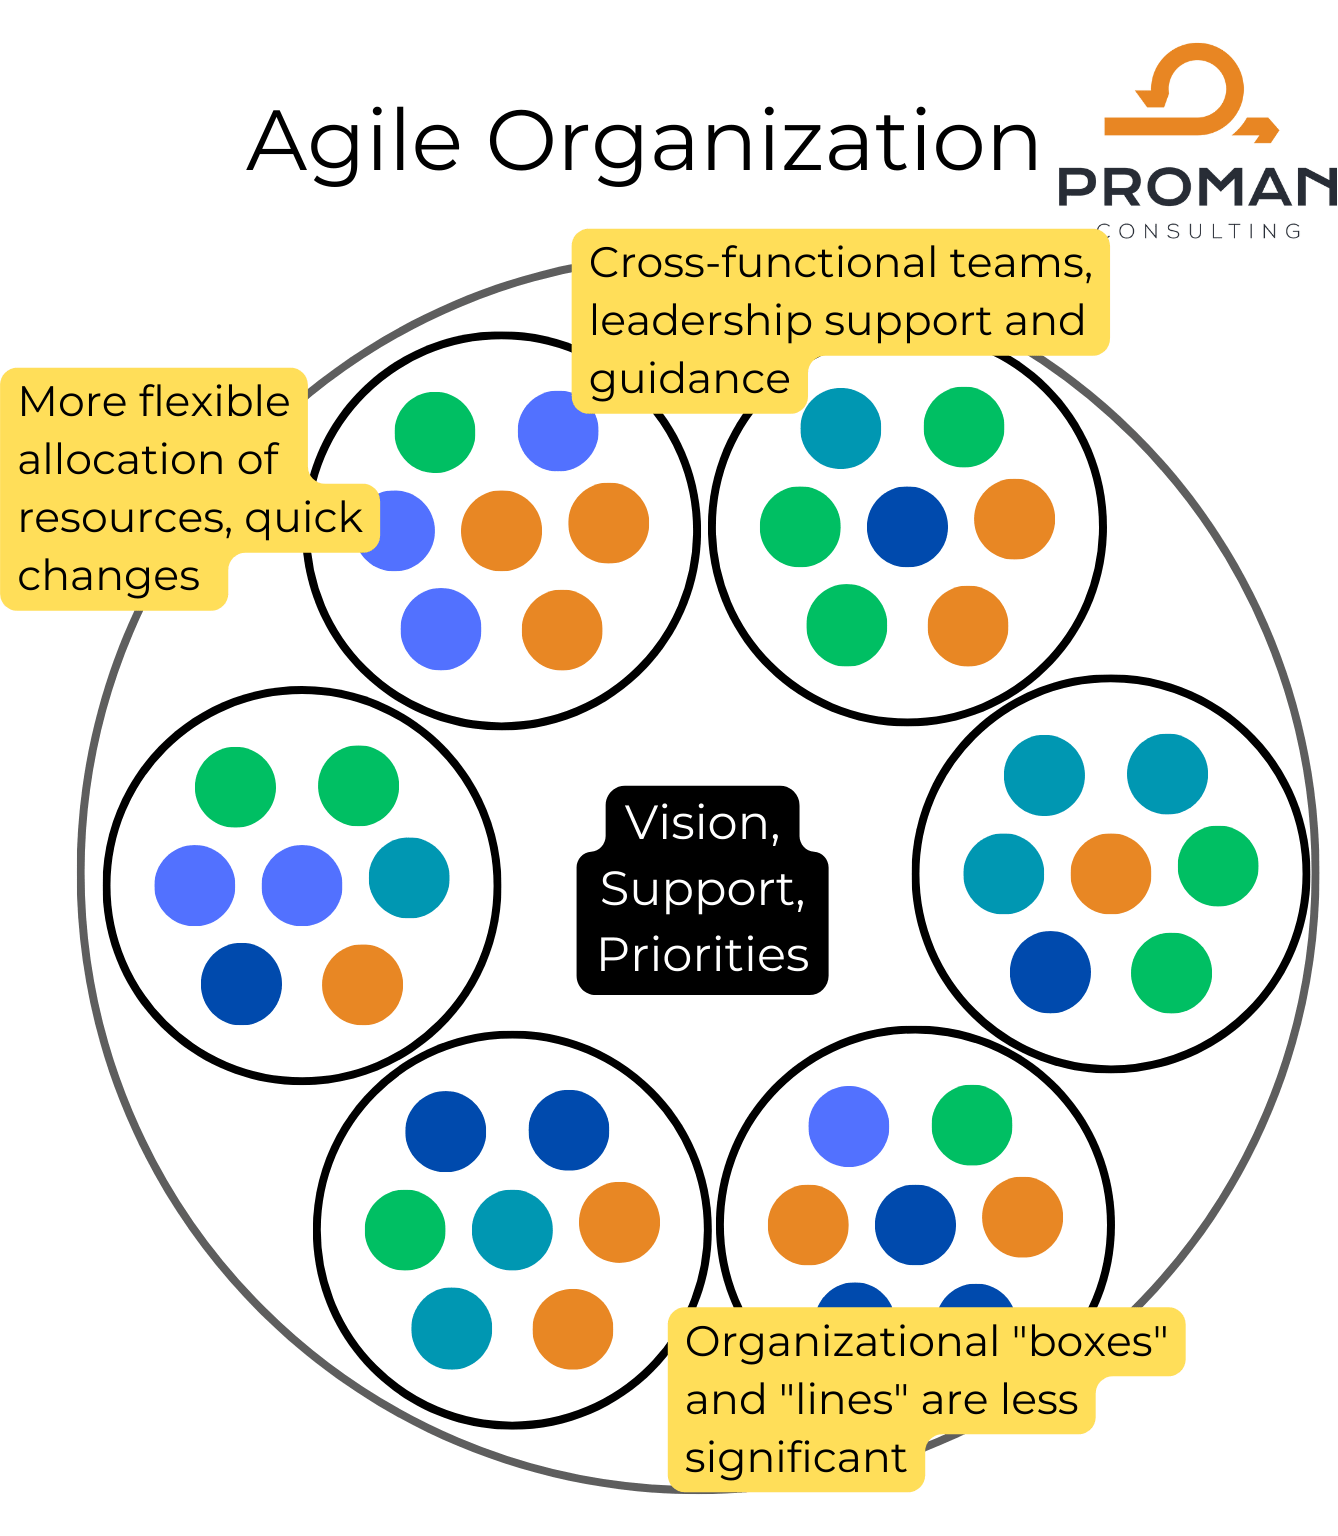 Agile organization